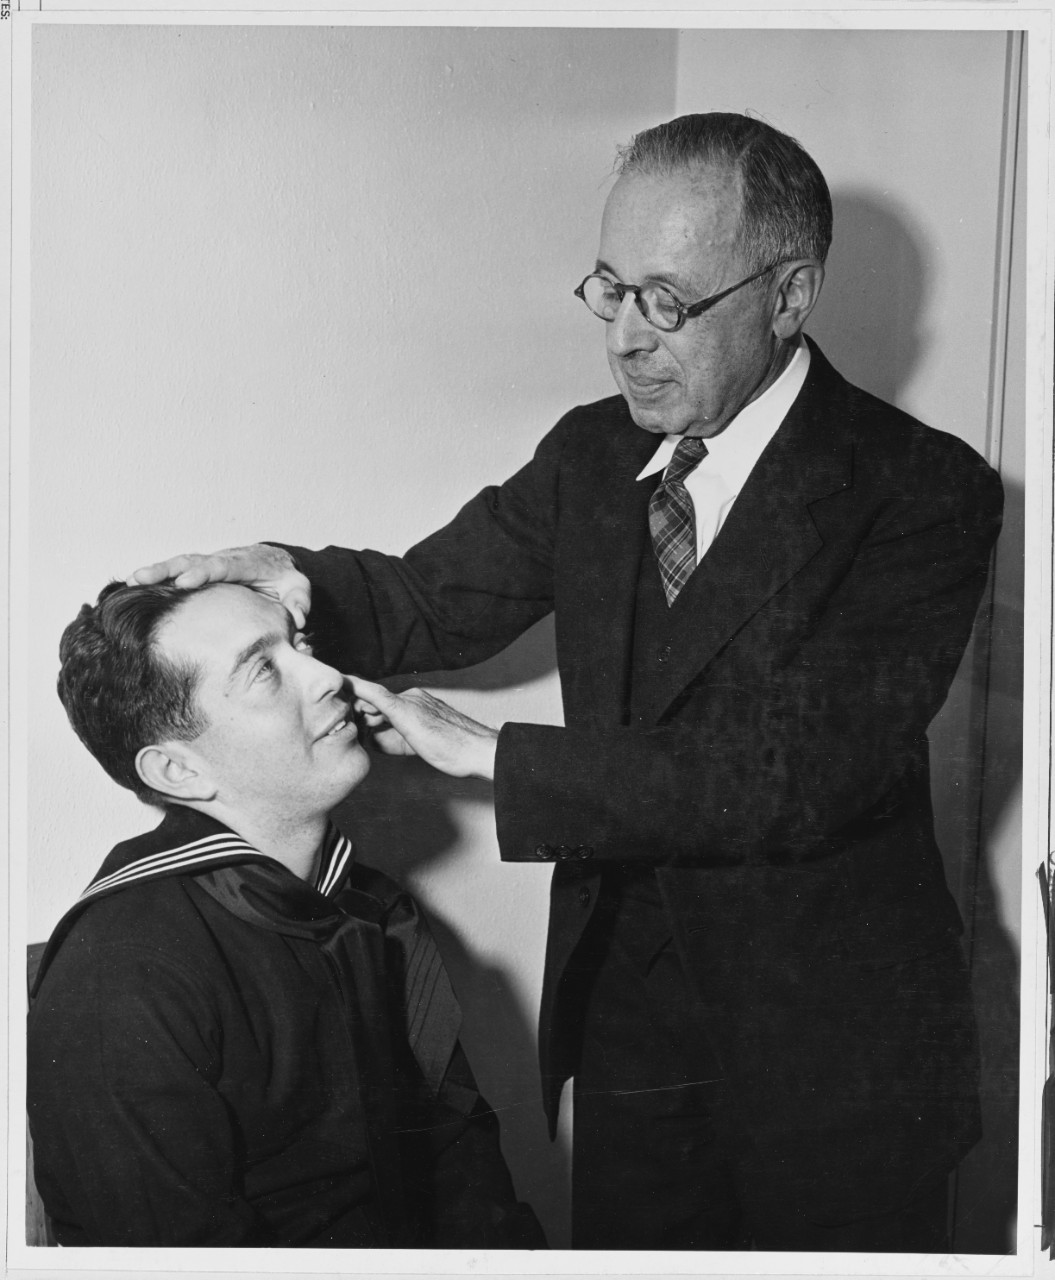 Dr. Meyer Wiener, World famous eye surgeon